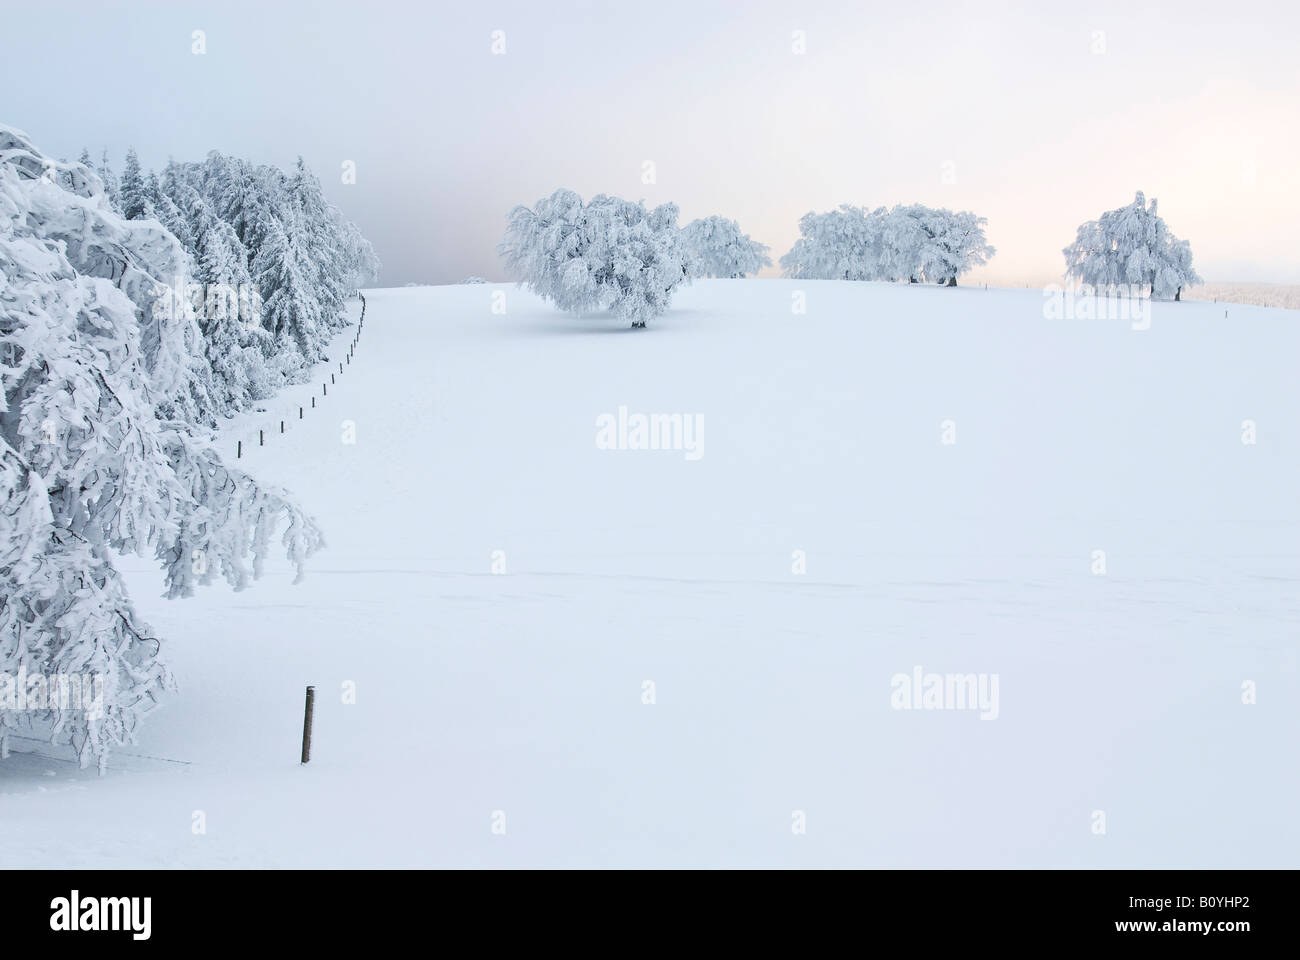 Germany, Black forest Schauinsland, Winter scenery Stock Photo